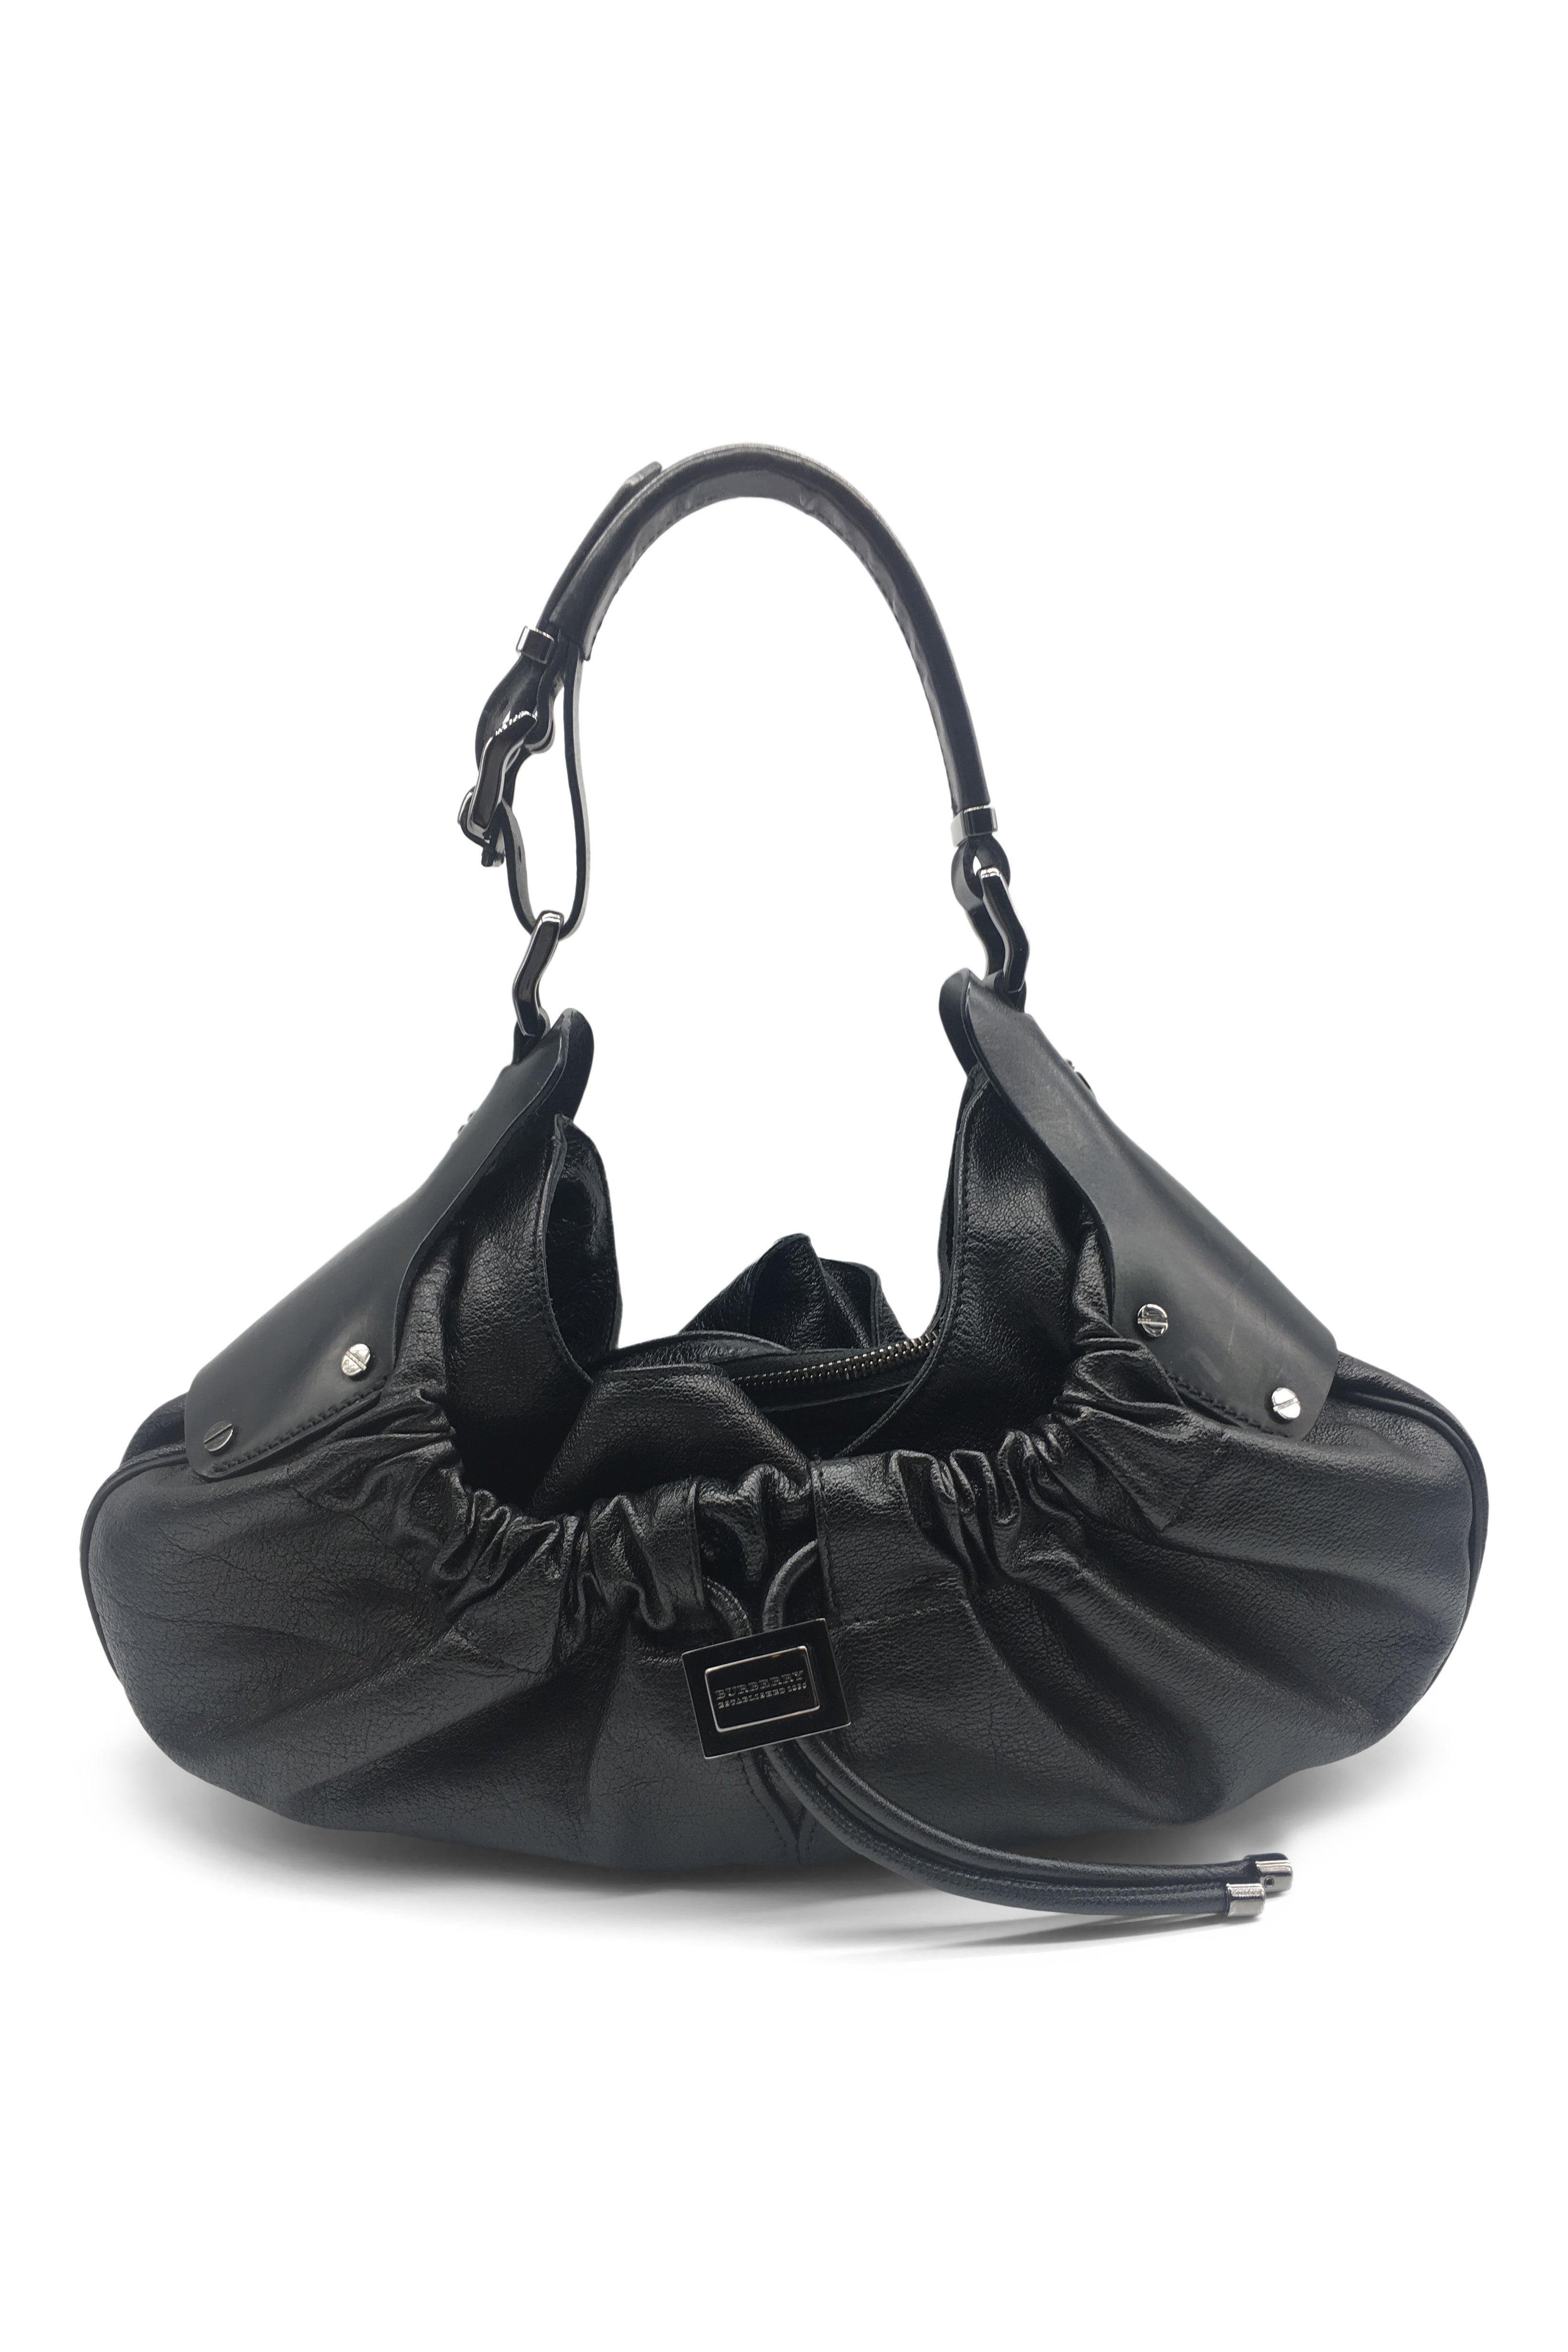 Burberry Black Leather Handbag – Revoir